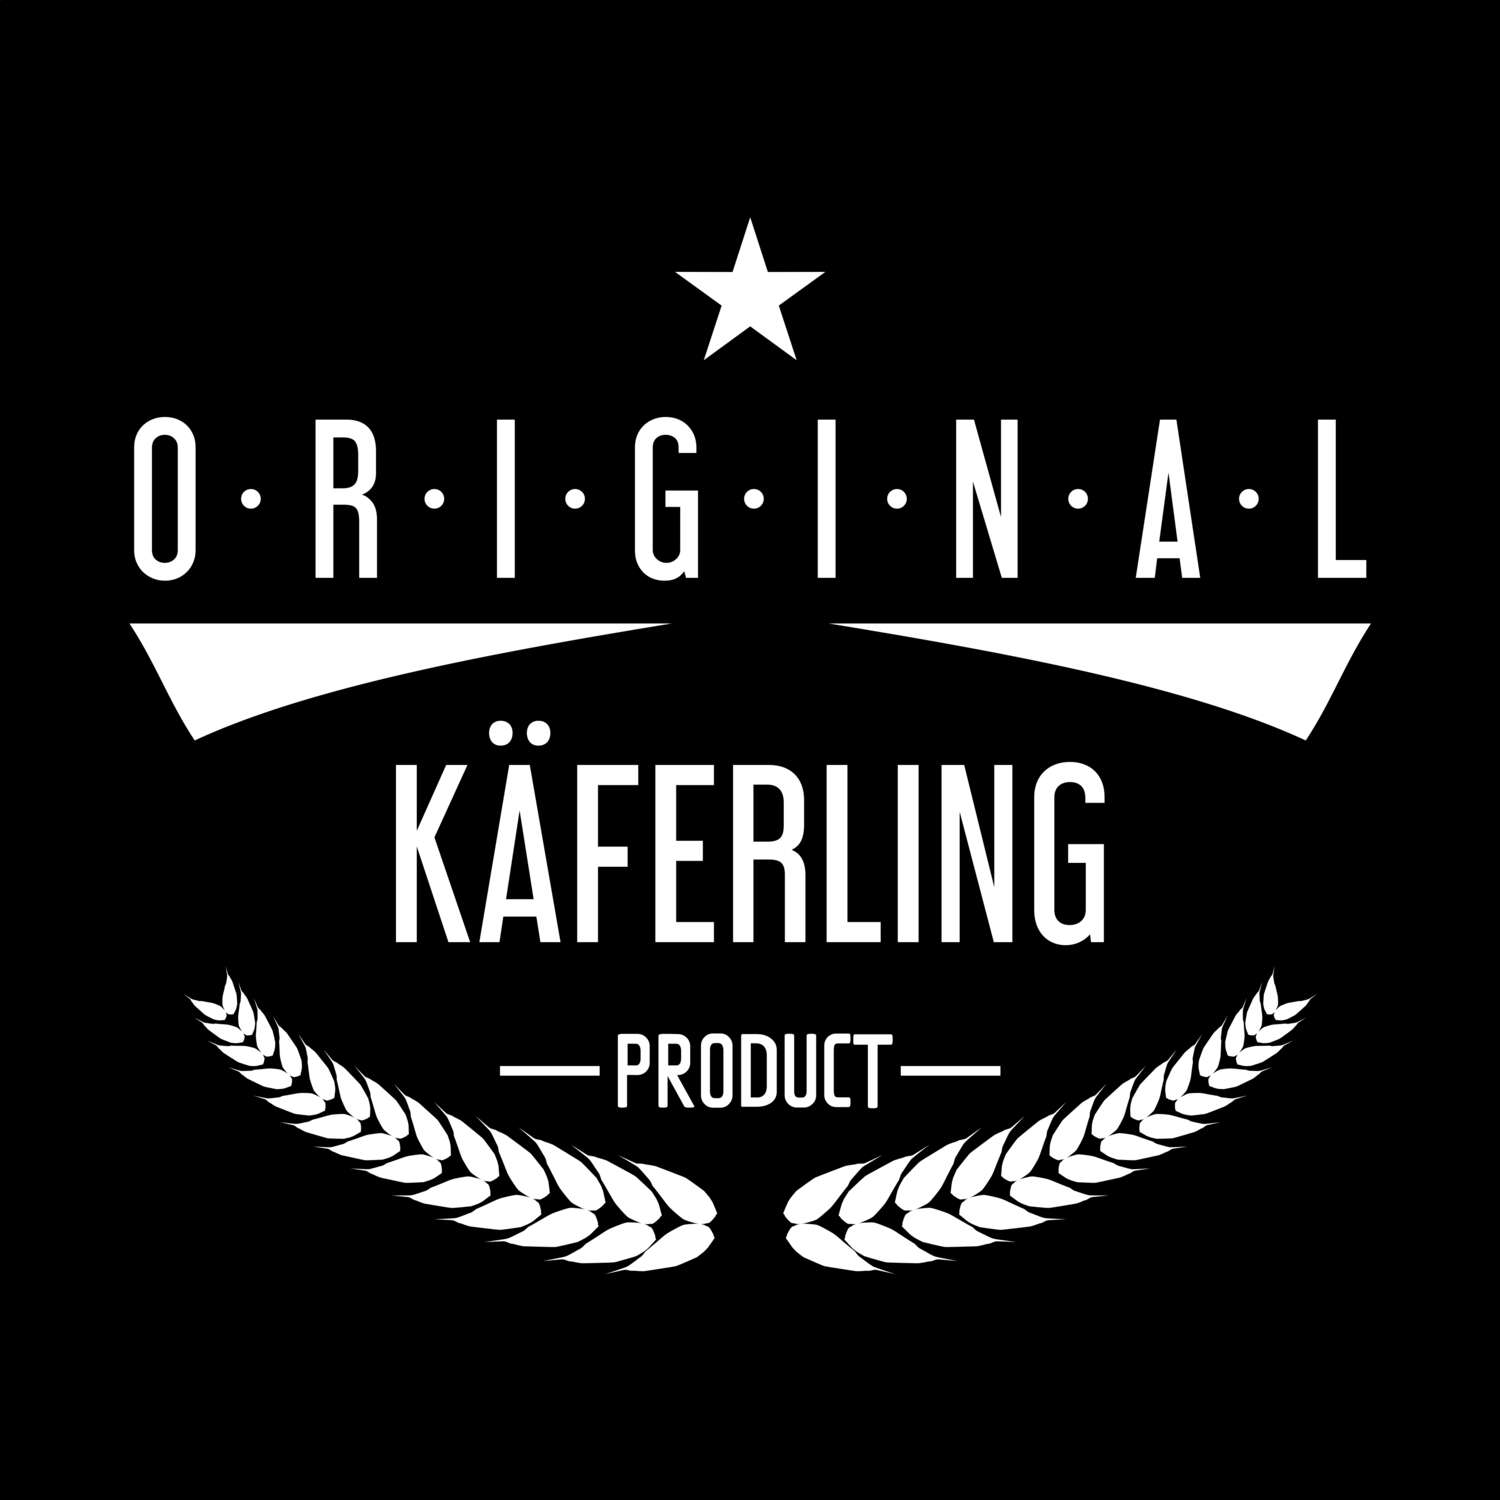 Käferling T-Shirt »Original Product«